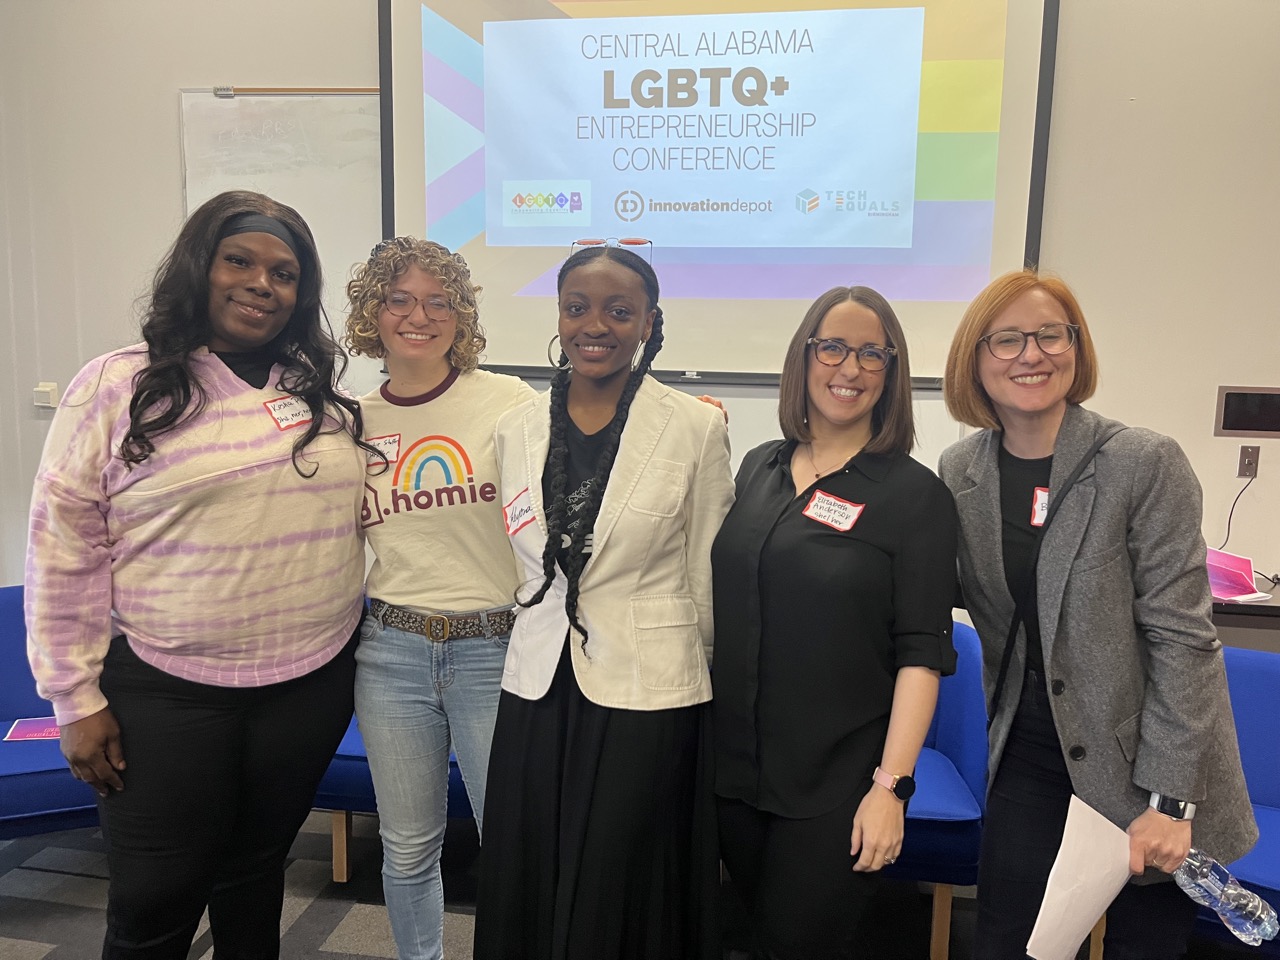 Central Alabama LGBTQ+ Entrepreneurship Conference panelists pose for a photo